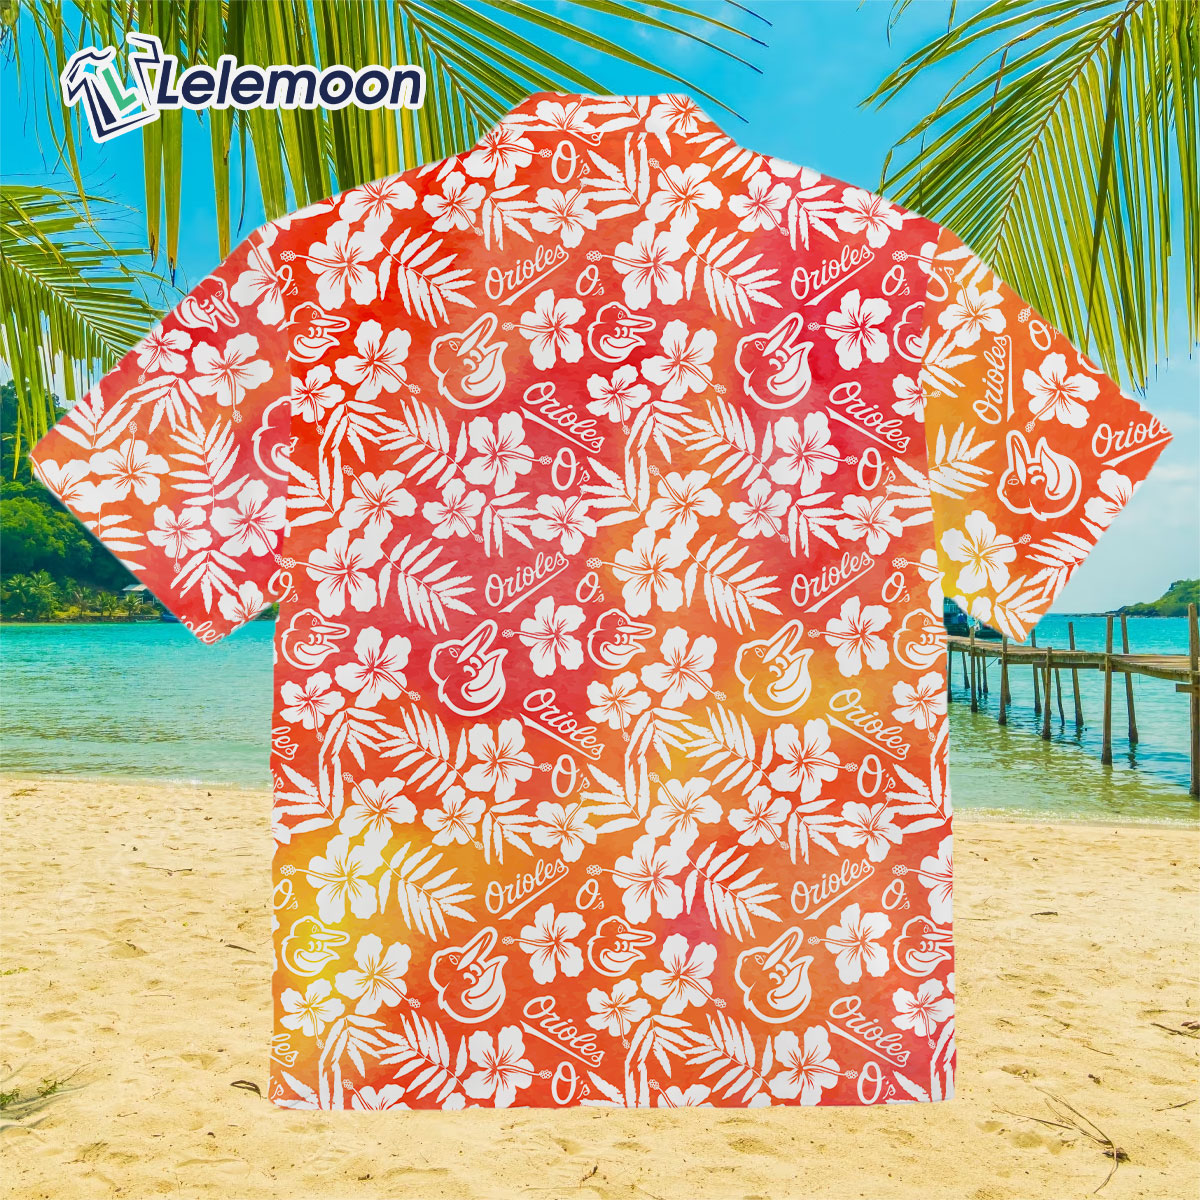 Baltimore Orioles Hawaiian Shirt